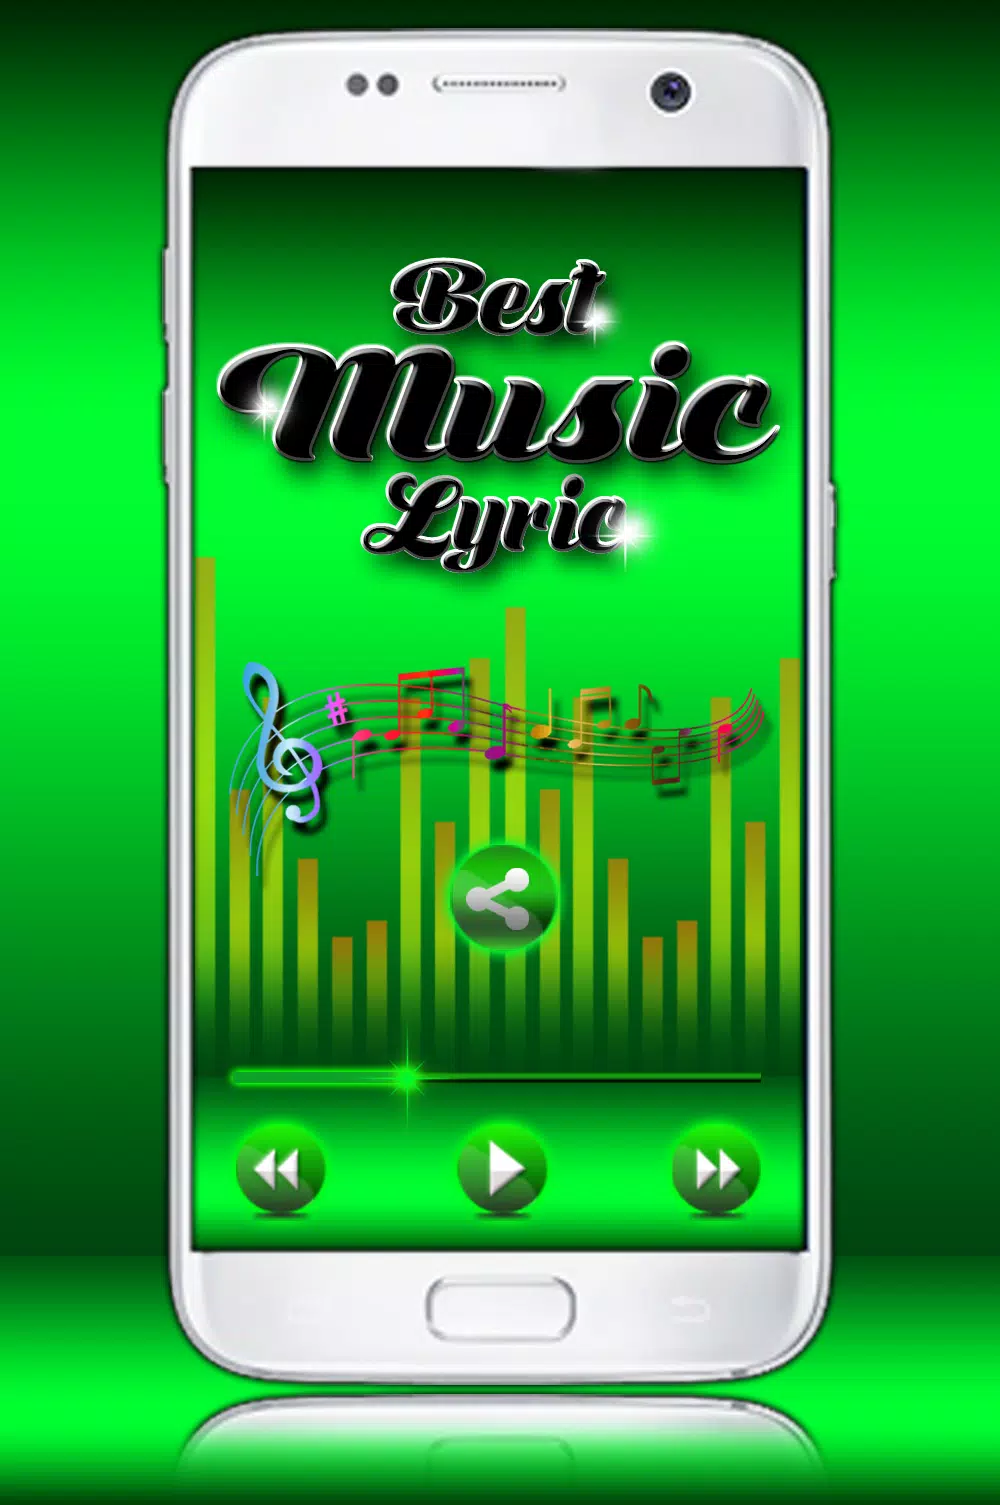 All Songs Celine Dion Mp3 APK pour Android Télécharger